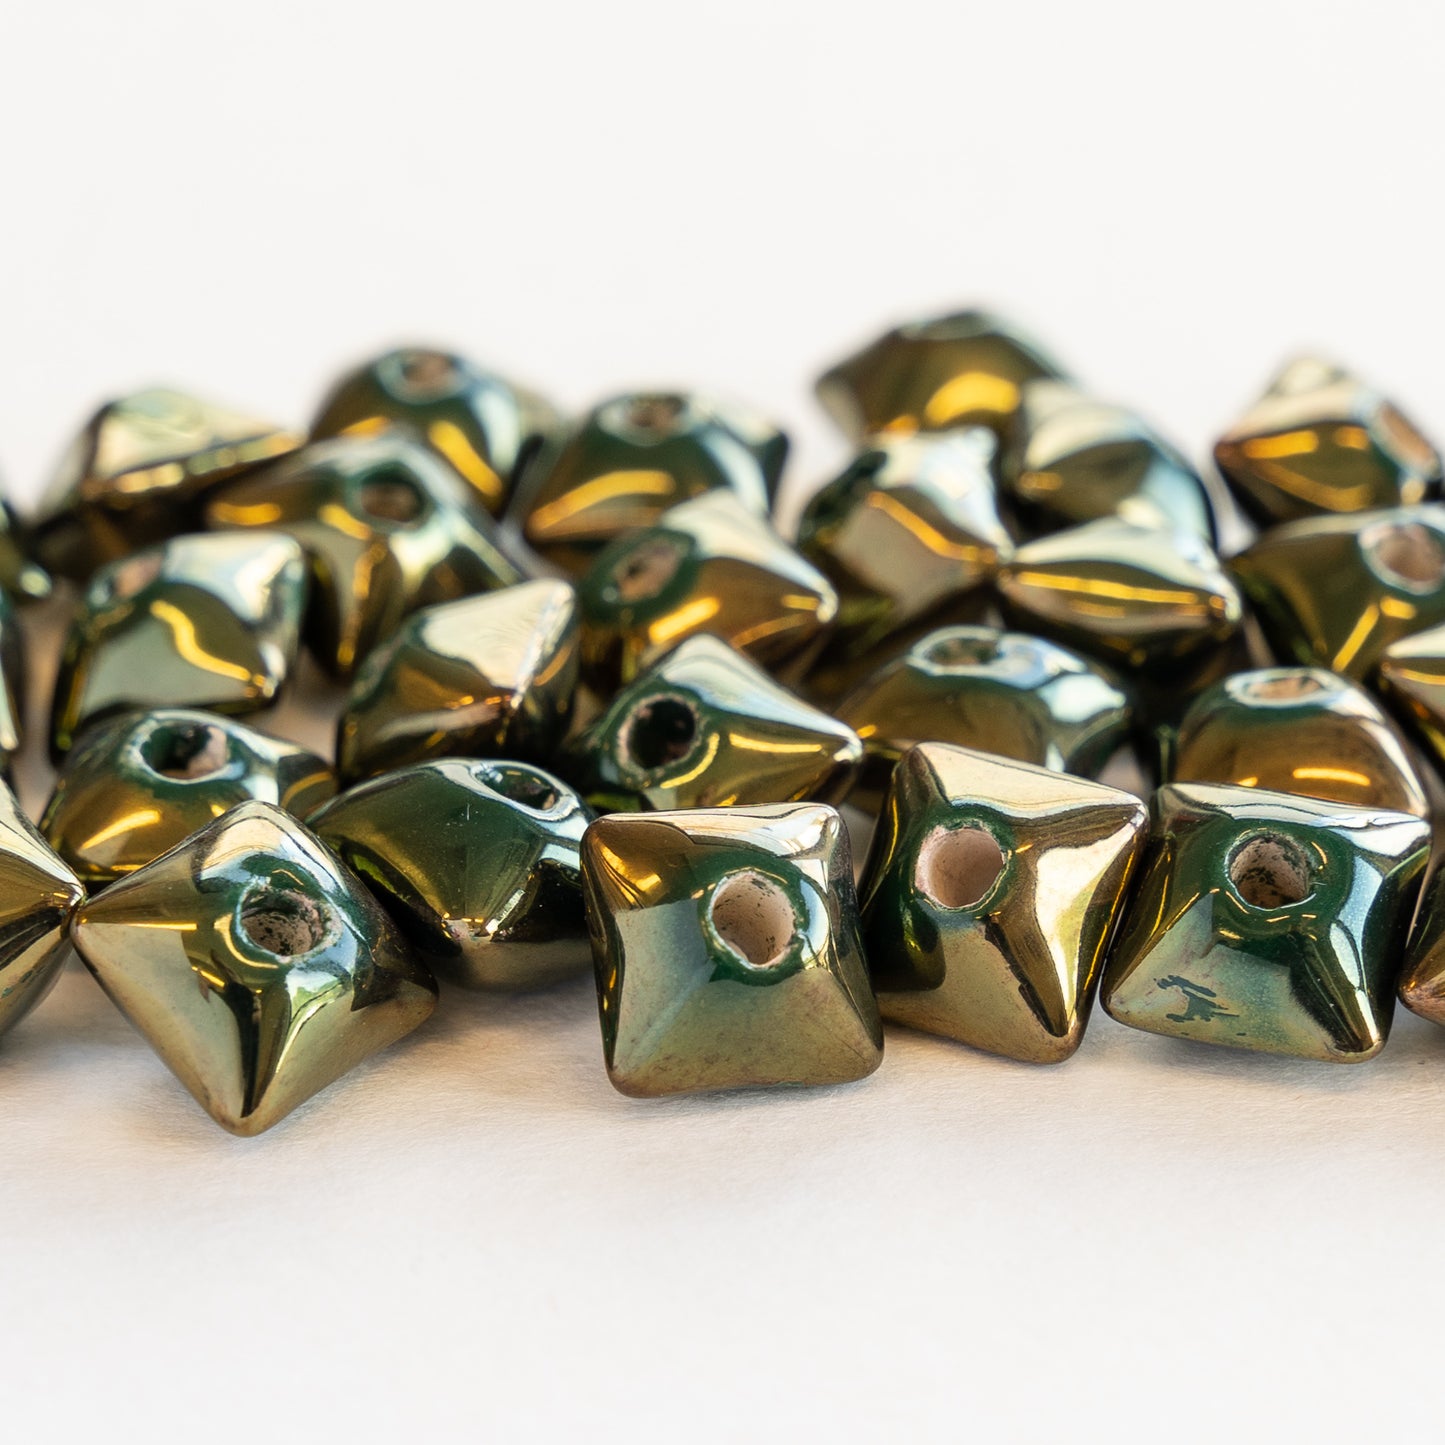 Shiny Glazed Ceramic Oxyhedron Beads - Gold & Forest Green